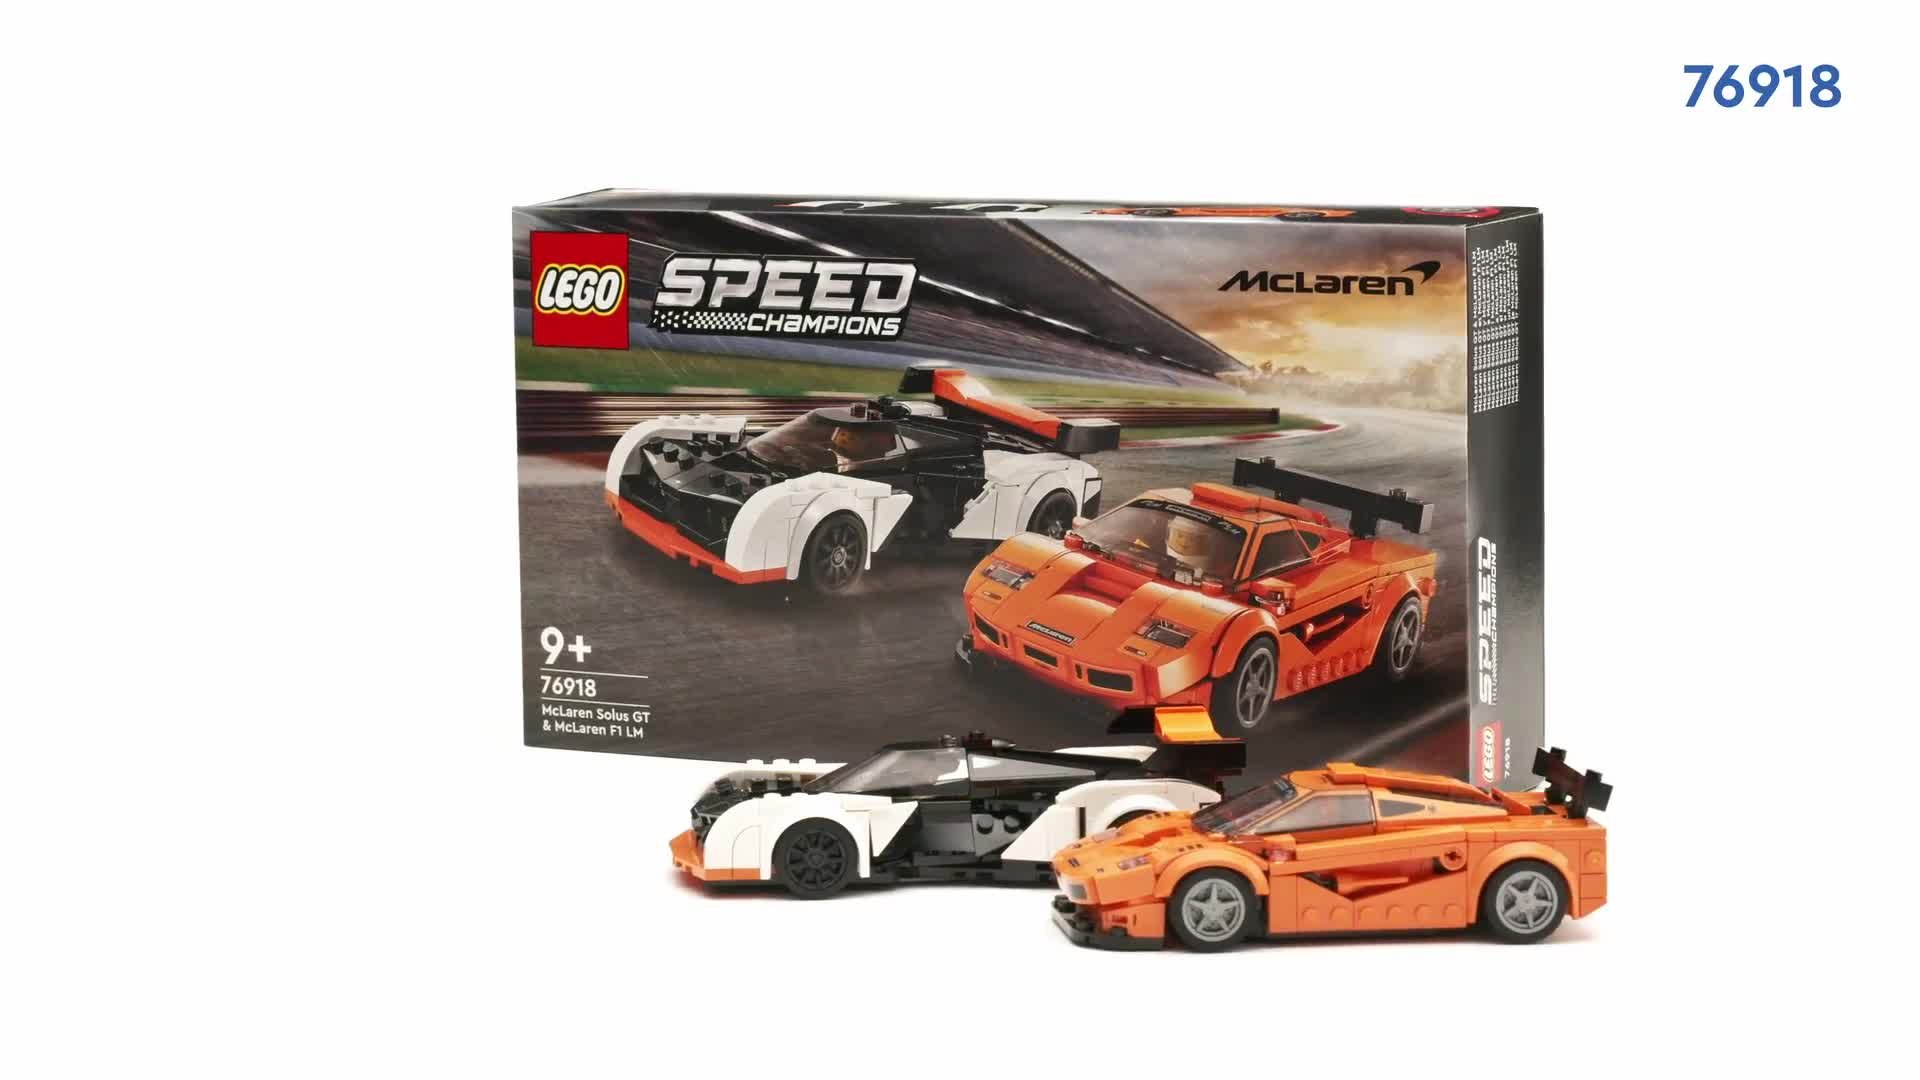 LEGO Speed Champions McLaren Solus GT & McLaren F1 LM 76918